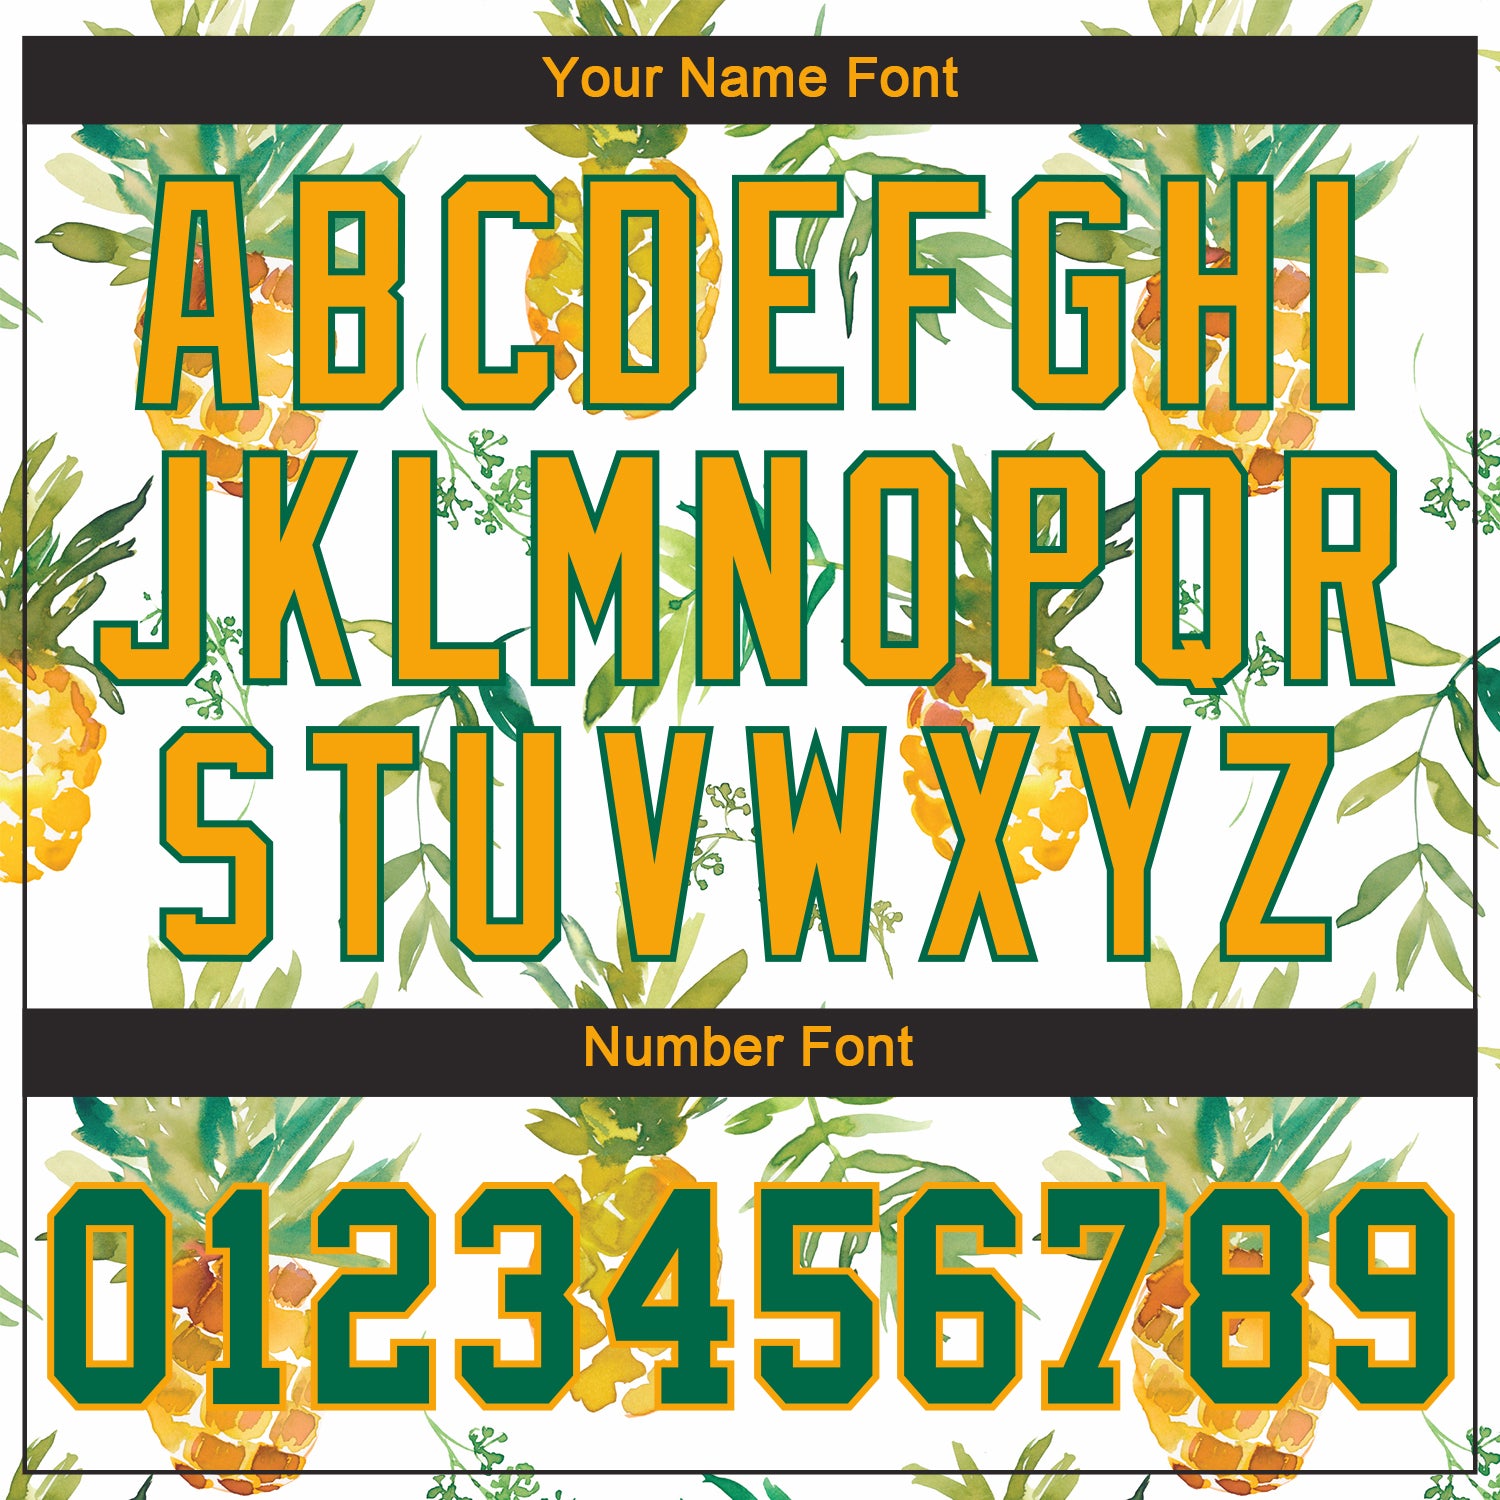 Custom Name Baltimore Orioles Baseball Island Pineapple Pattern